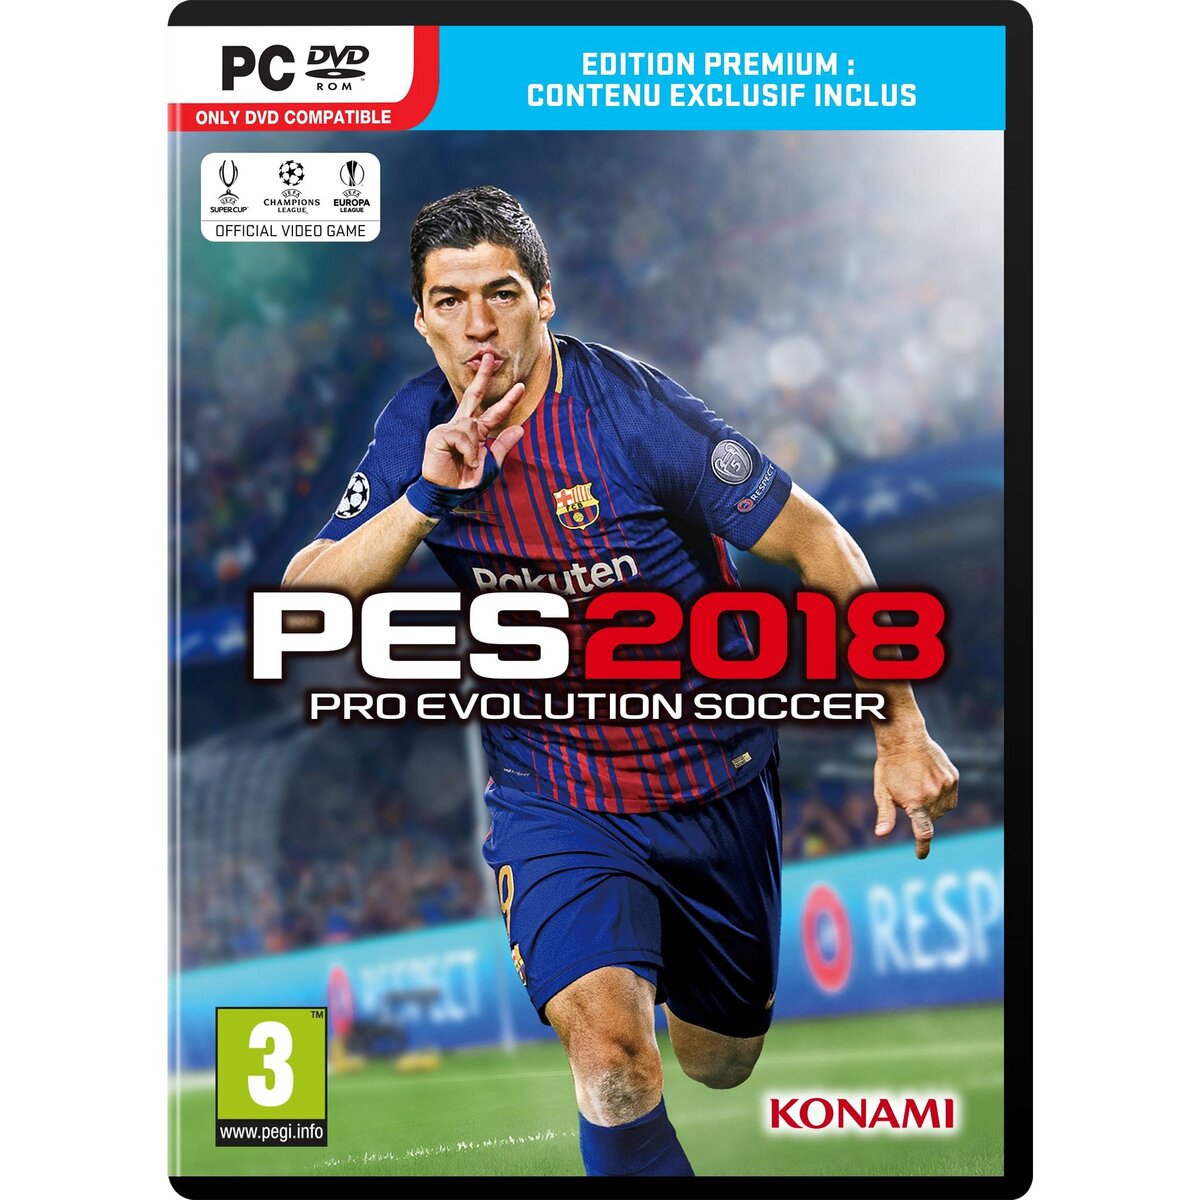 Pro Evolution Soccer 2018 - Edition Premium PC